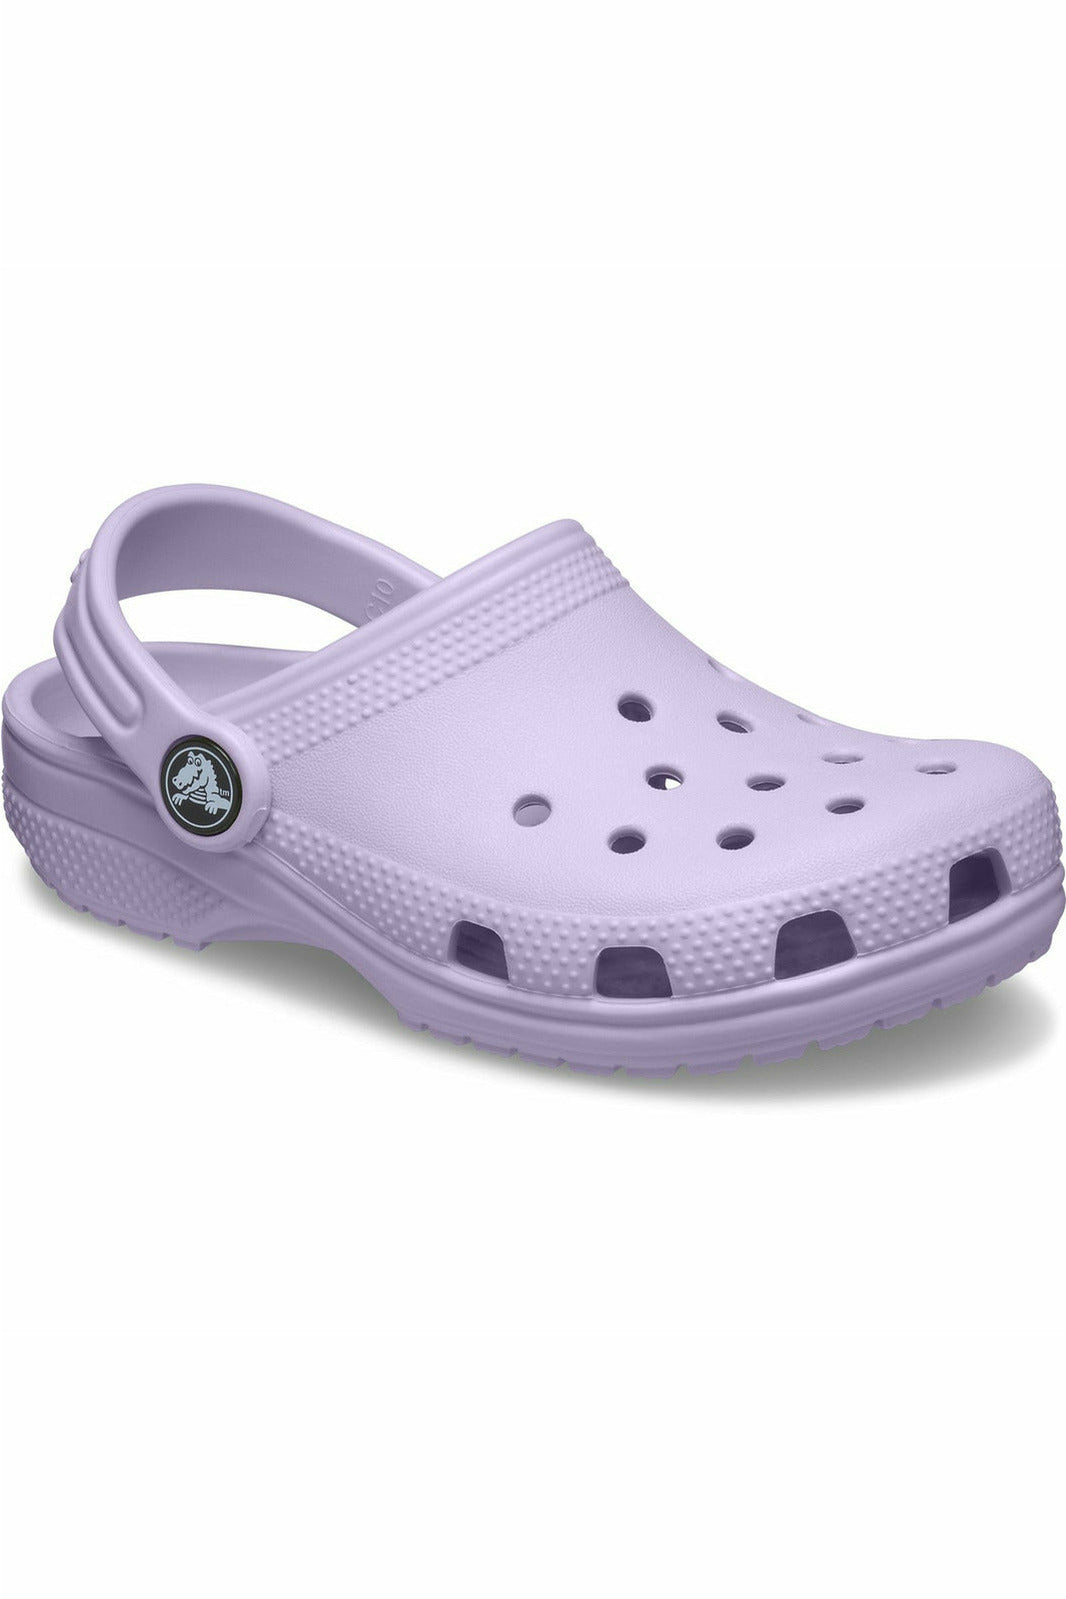 Crocs - Children's baby  Classic Clog